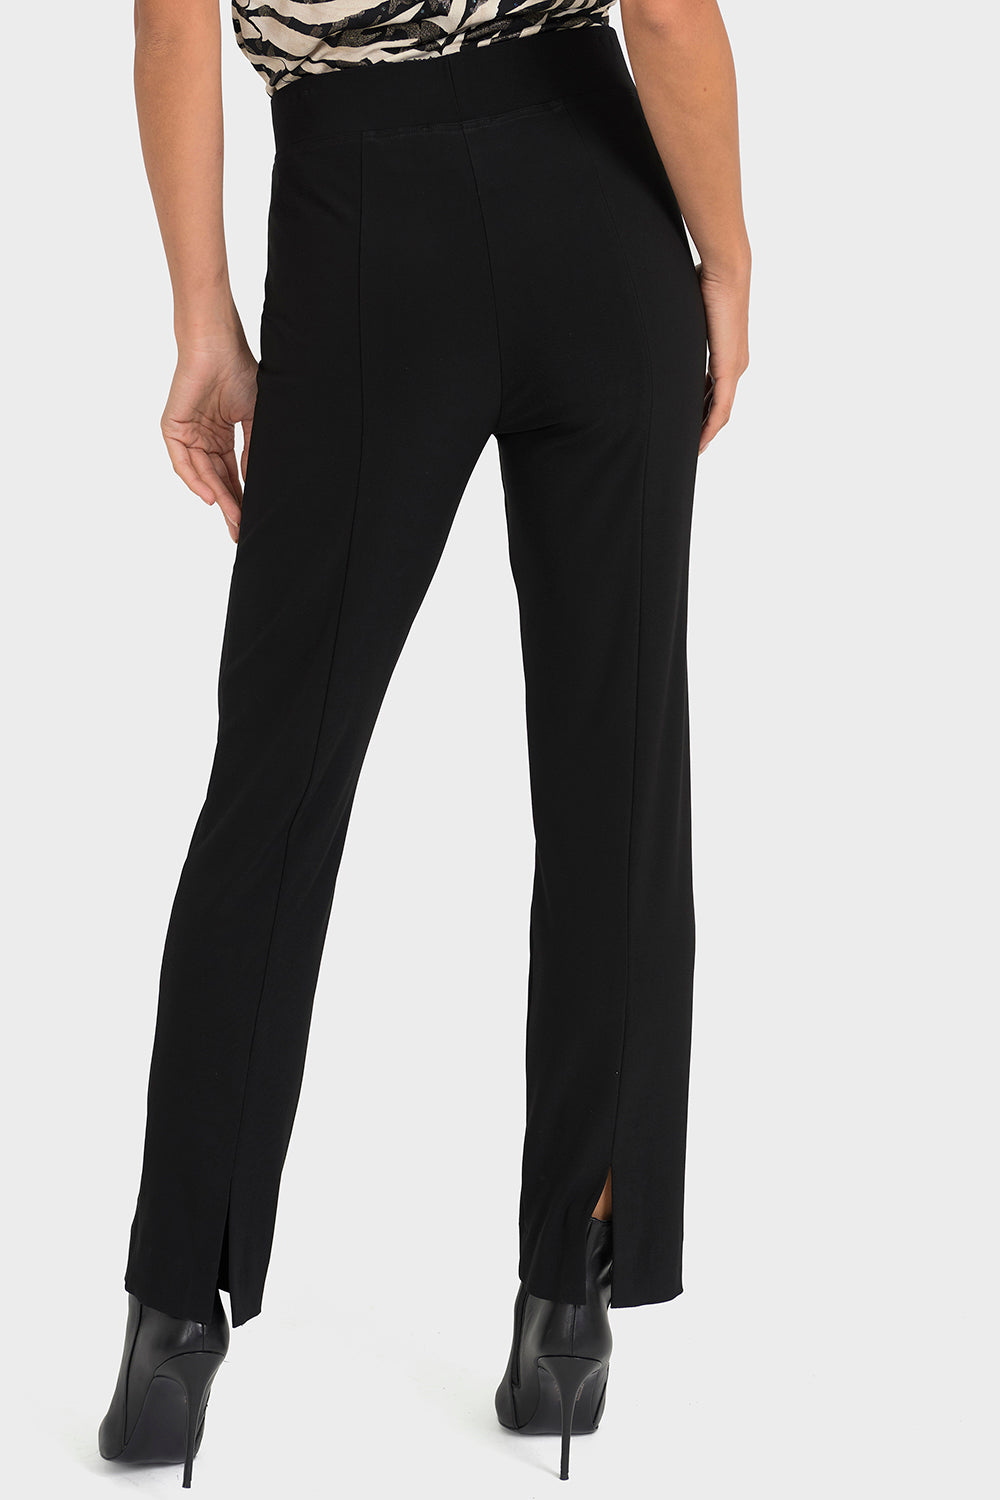 Joseph Ribkoff Black Pants Style 193100